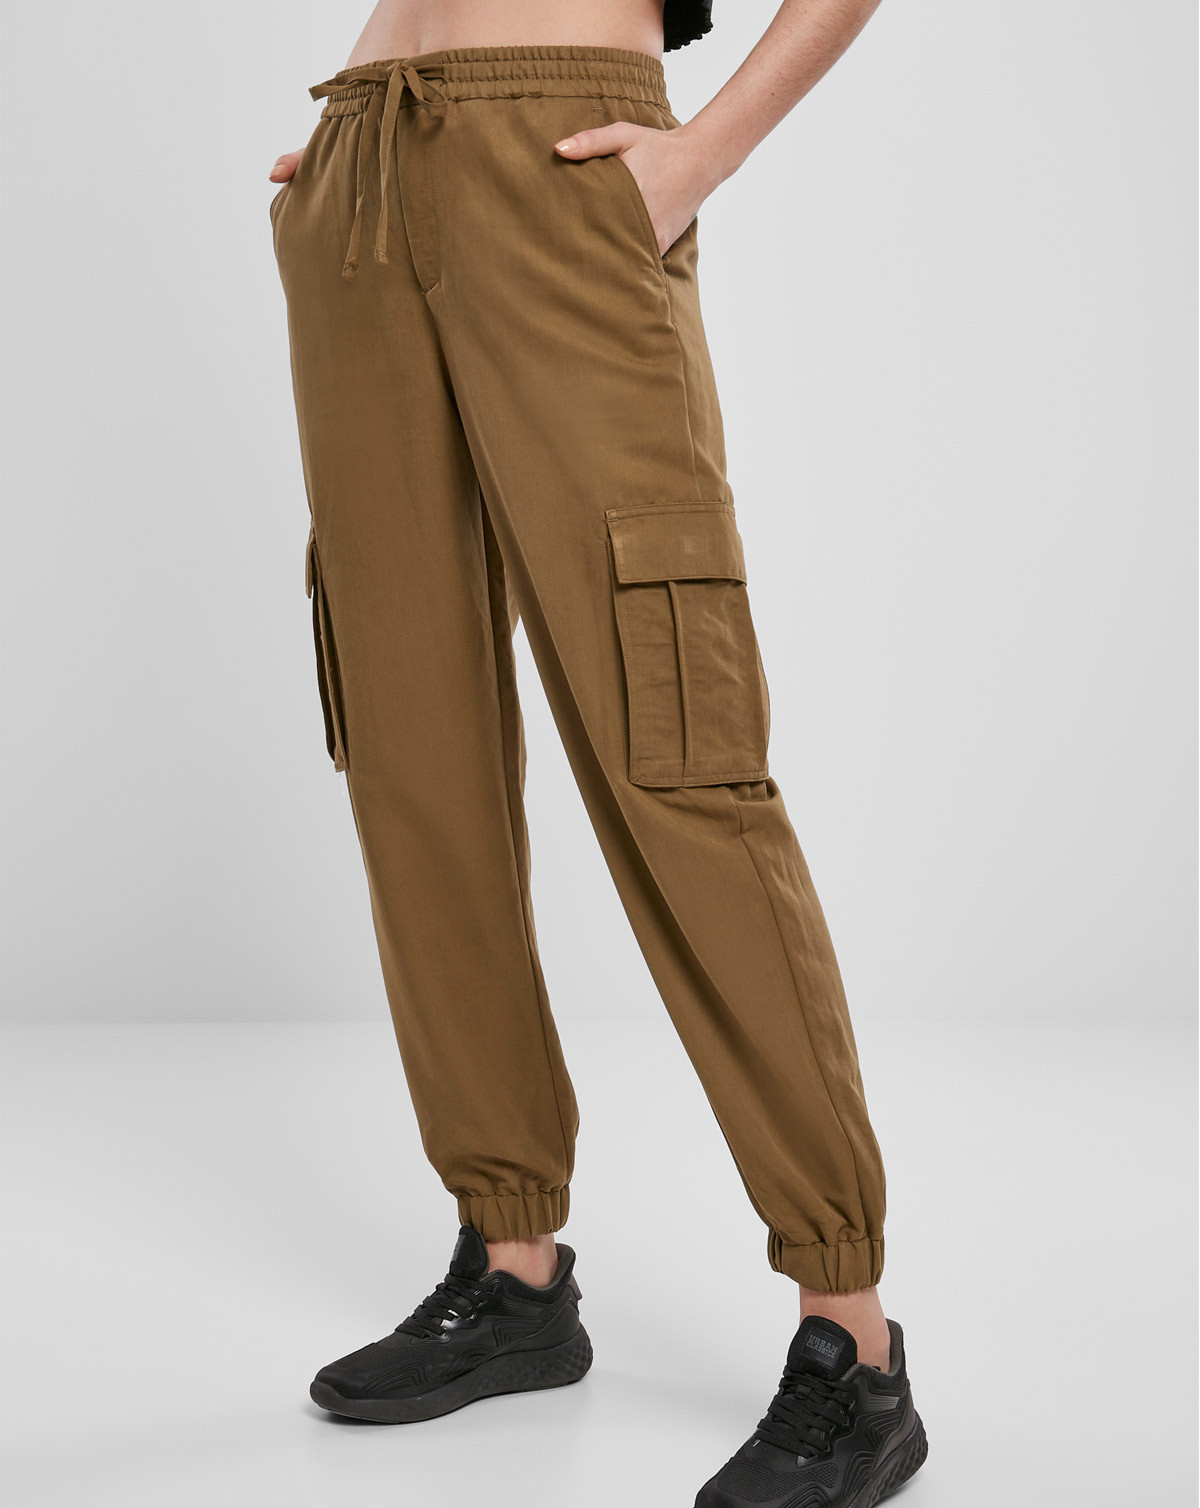 Urban Classics Ladies Viscose Twill Cargo Pants (Summer Olive, S)